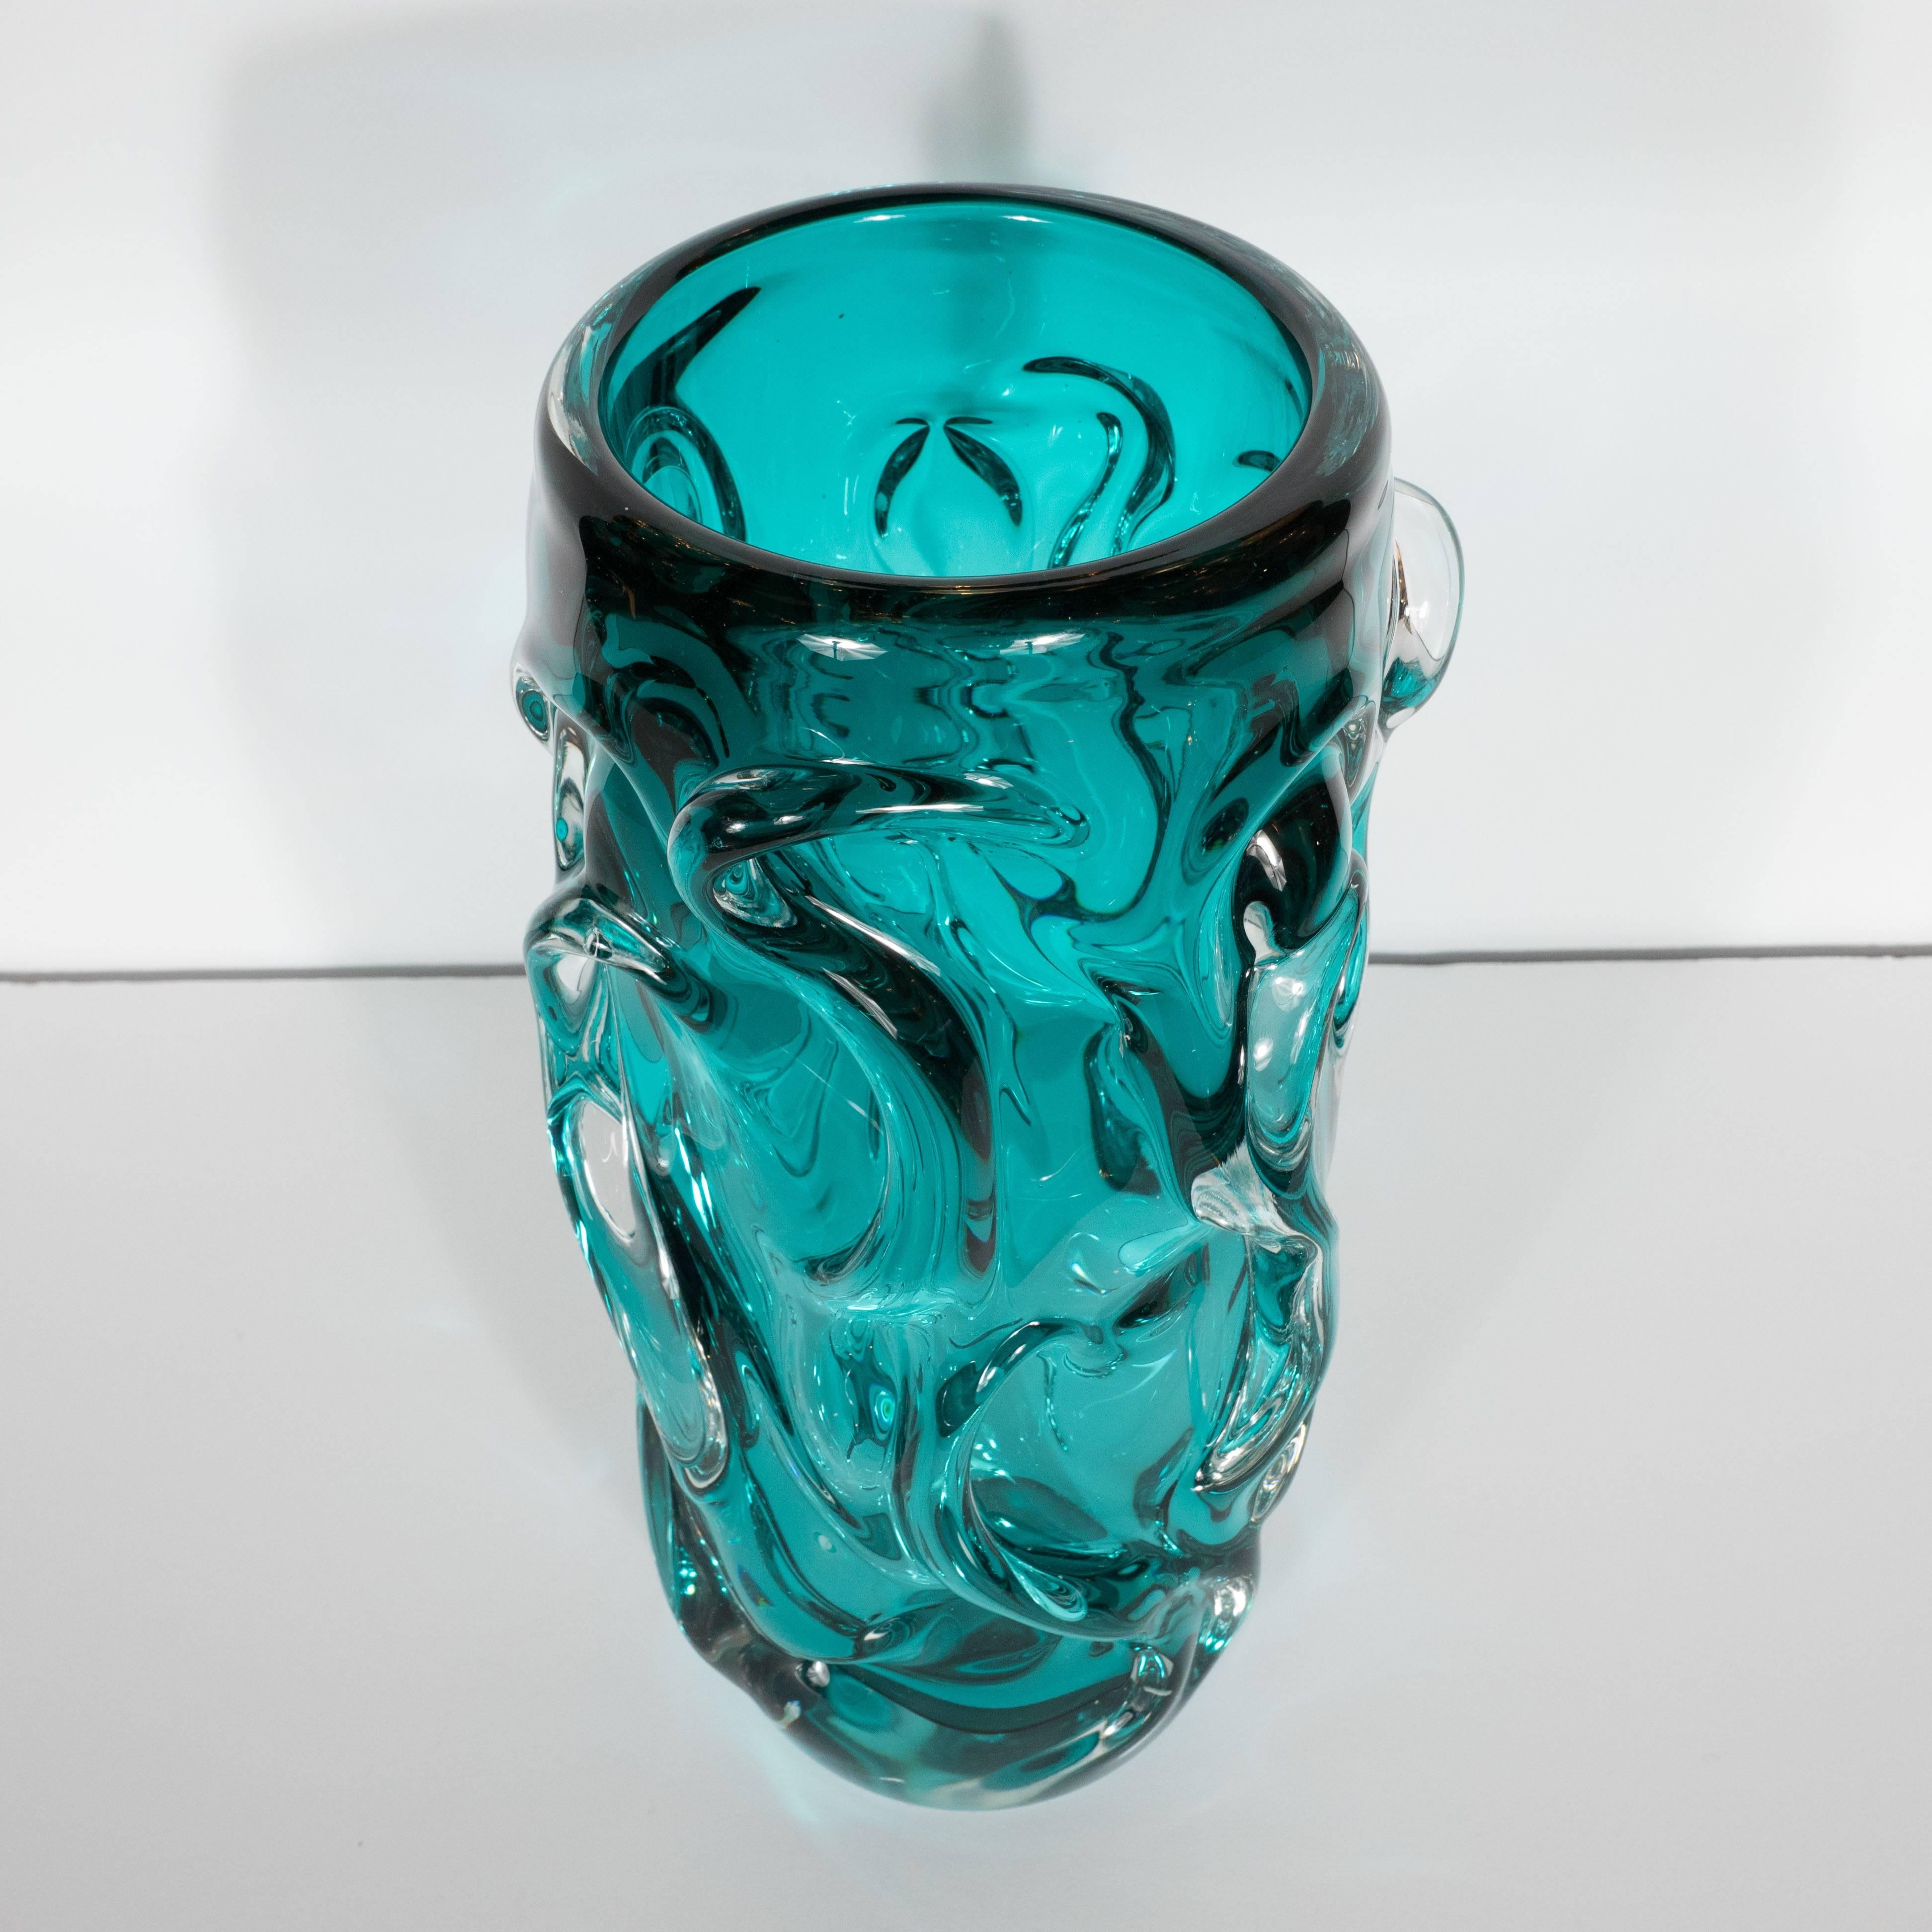 Mid-Century Modern Midcentury Sculptural Handblown Murano Vase in Translucent and Teal Glass